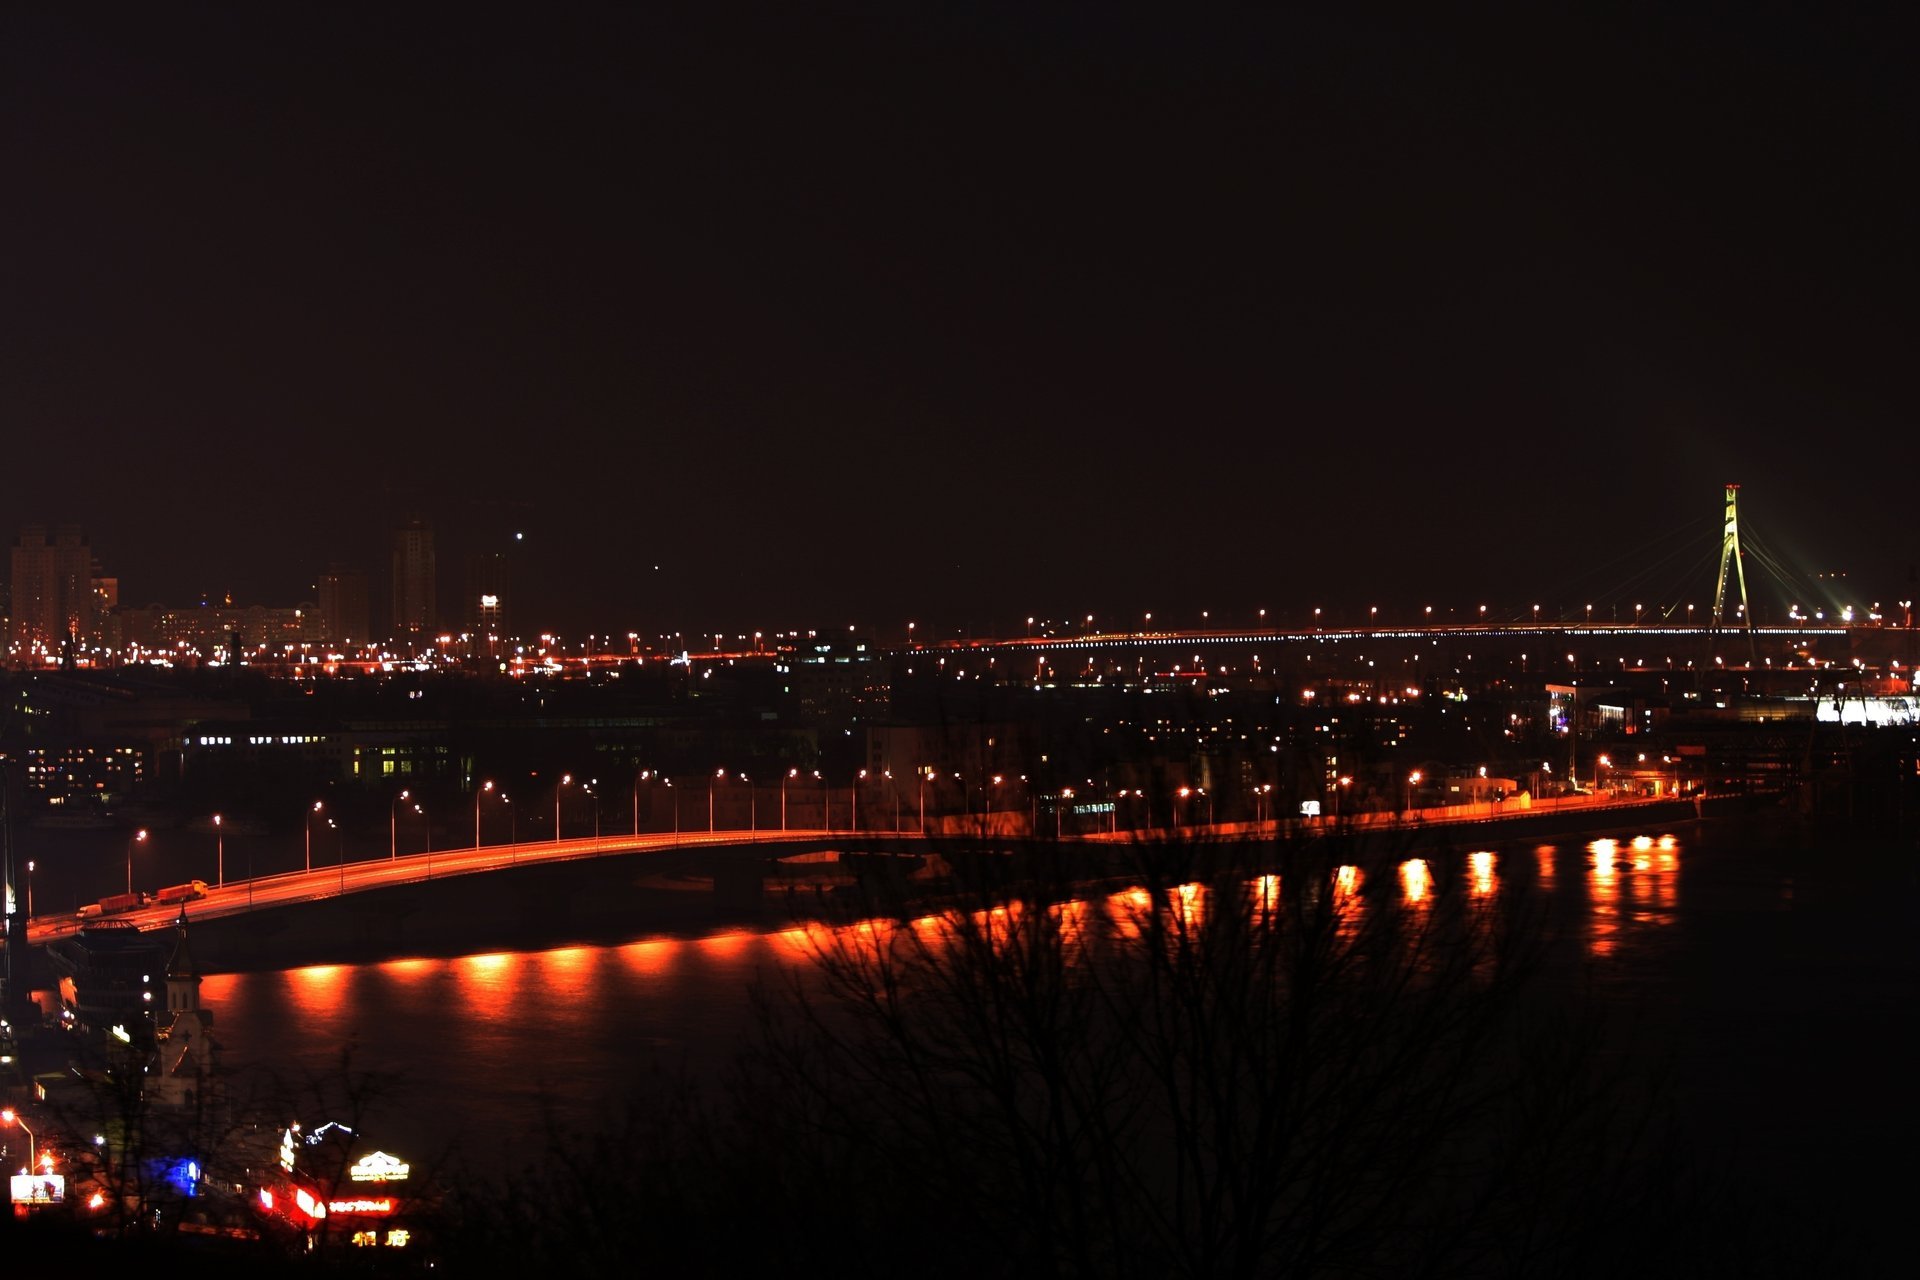 Moscow Bridge at night